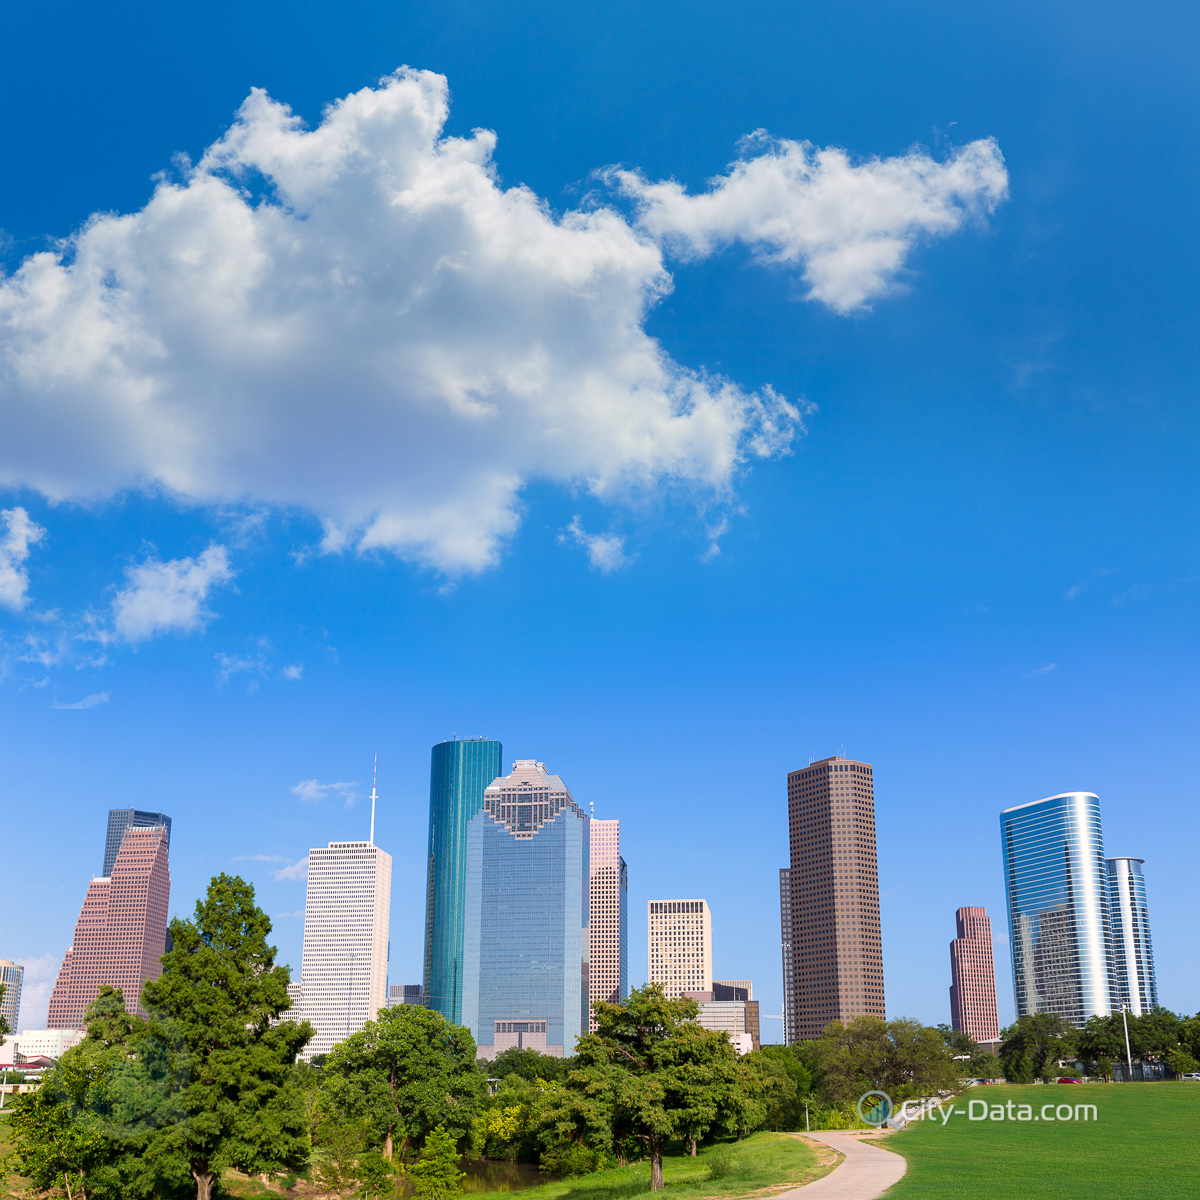 Houston skyline with park turf